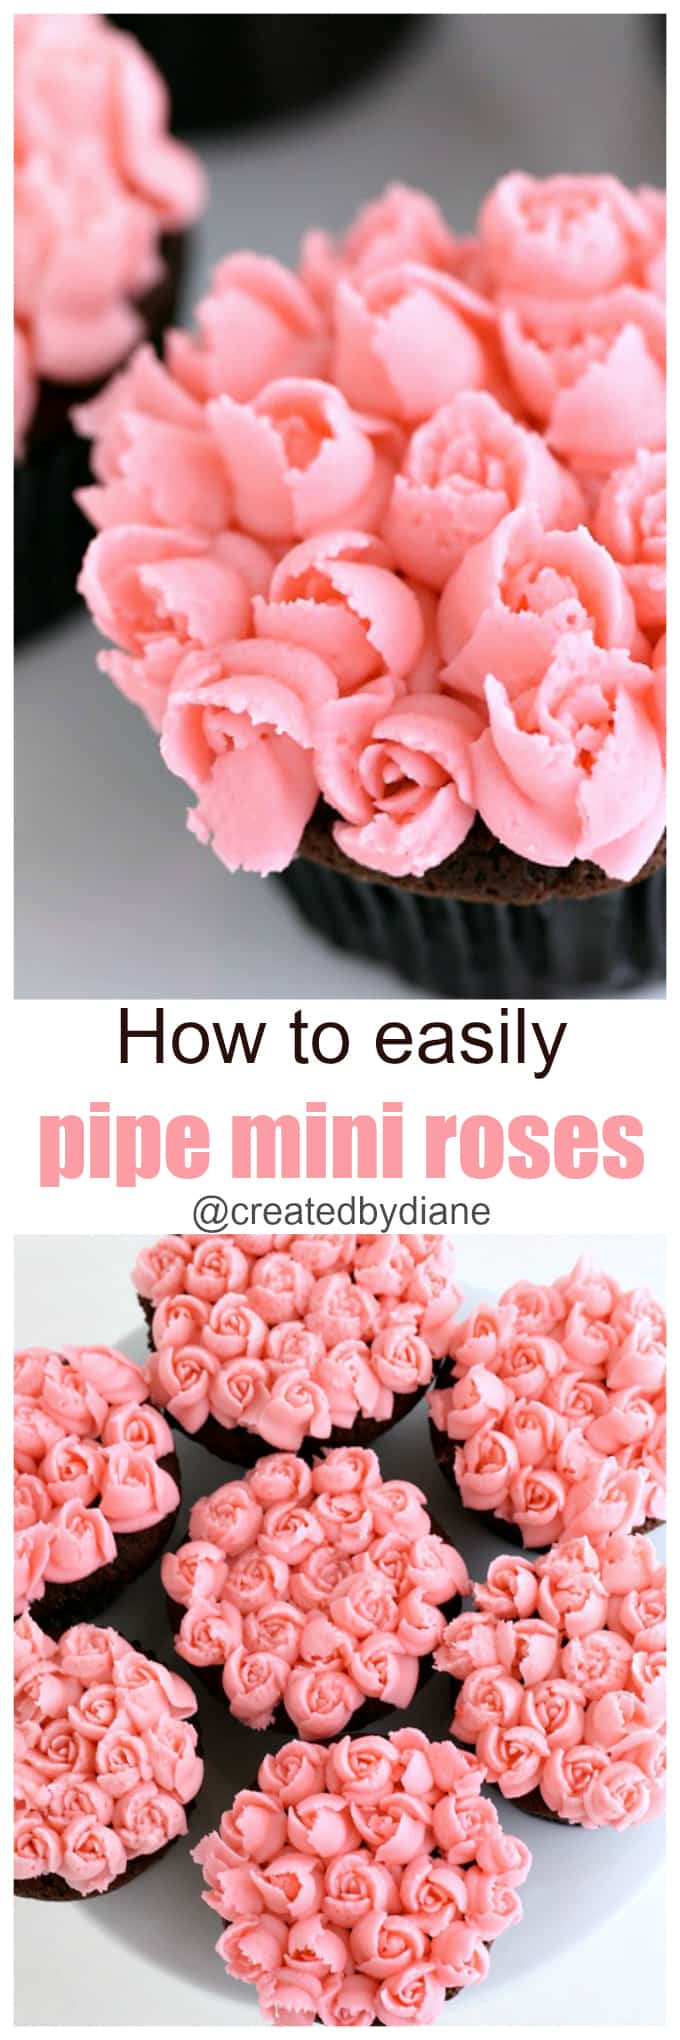 How to easily pipe mini roses @createdbydiane